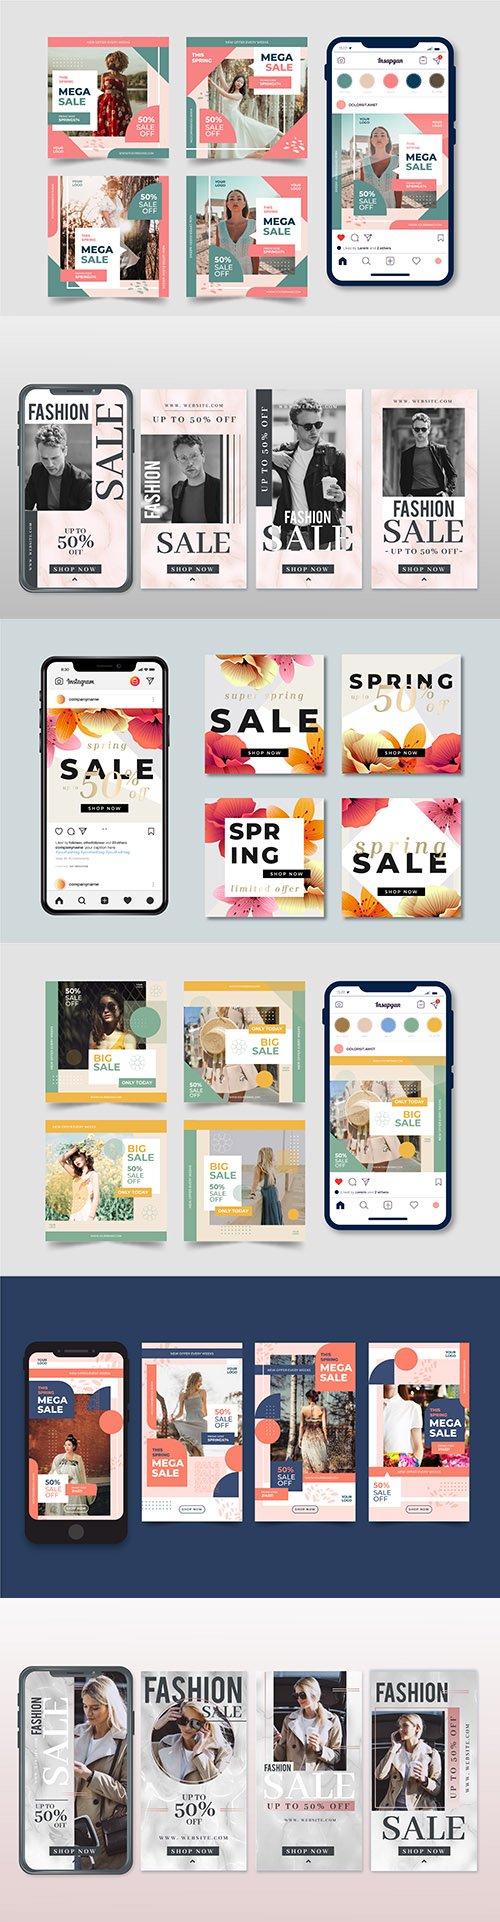 Instagram post spring sale design collection